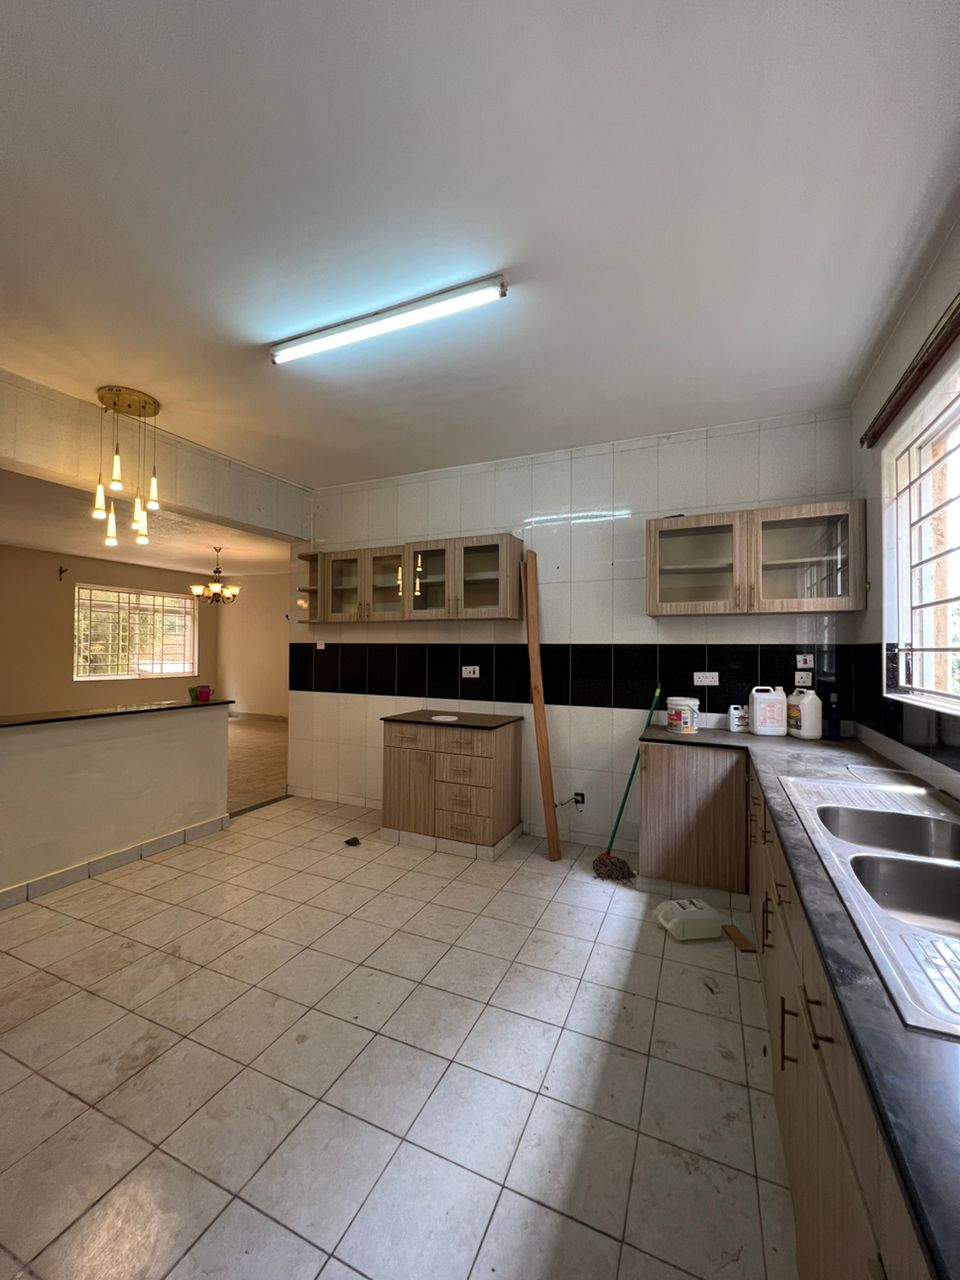 3 bedroom plus dsq apartment for rent in Kilimani, Nairobi. Musilli Homes